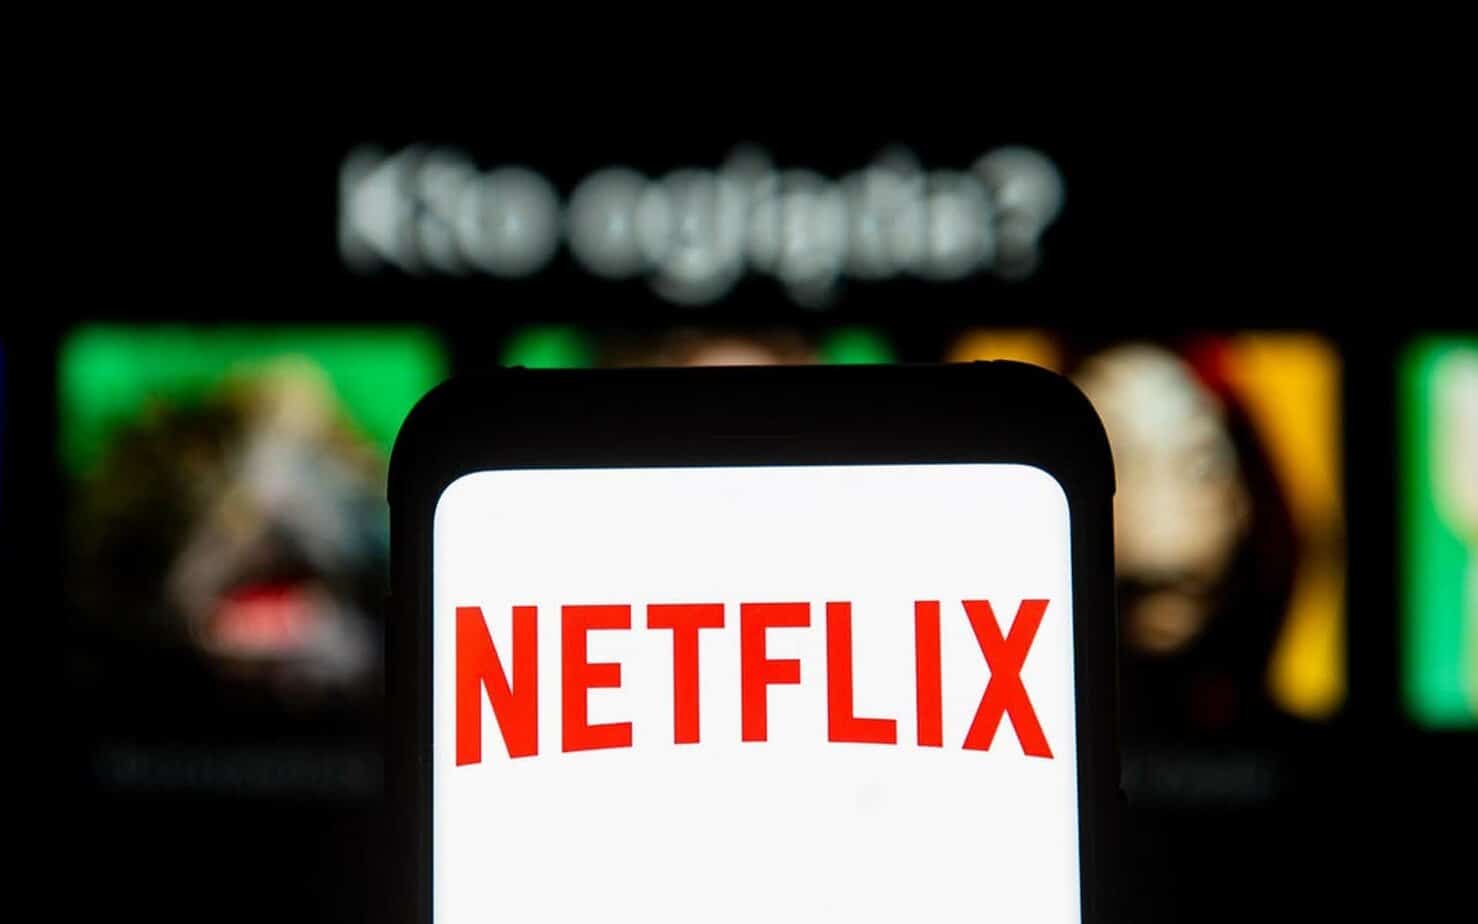 Netflix Says It Will Stay AD-FREE